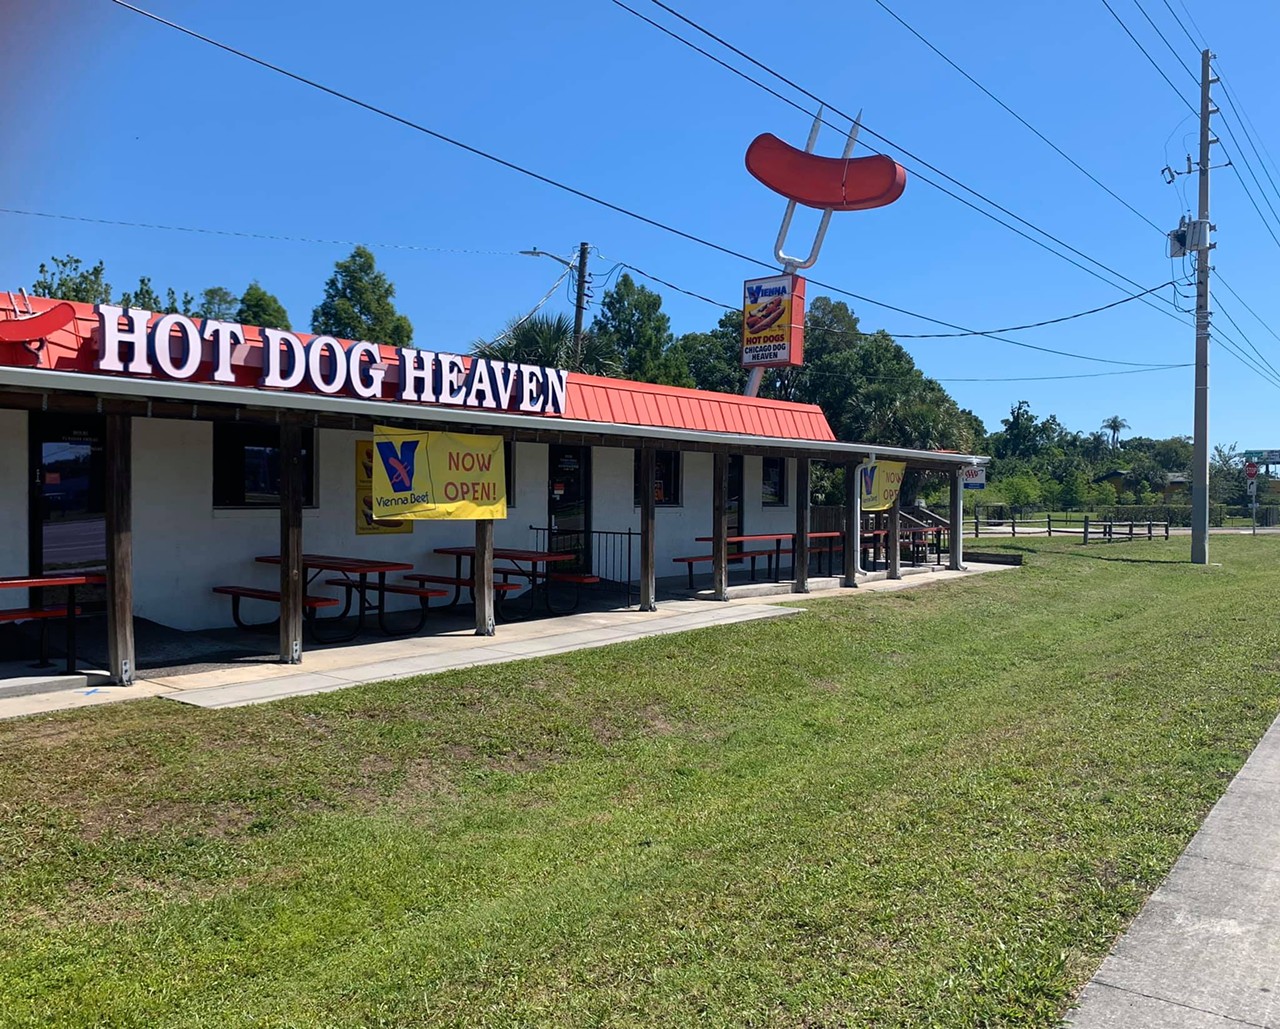 Best Hot Dogs
Winner: Hot Dog Heaven
Runners-up: Cholo Dogs, Vegan Hot Dog Cart